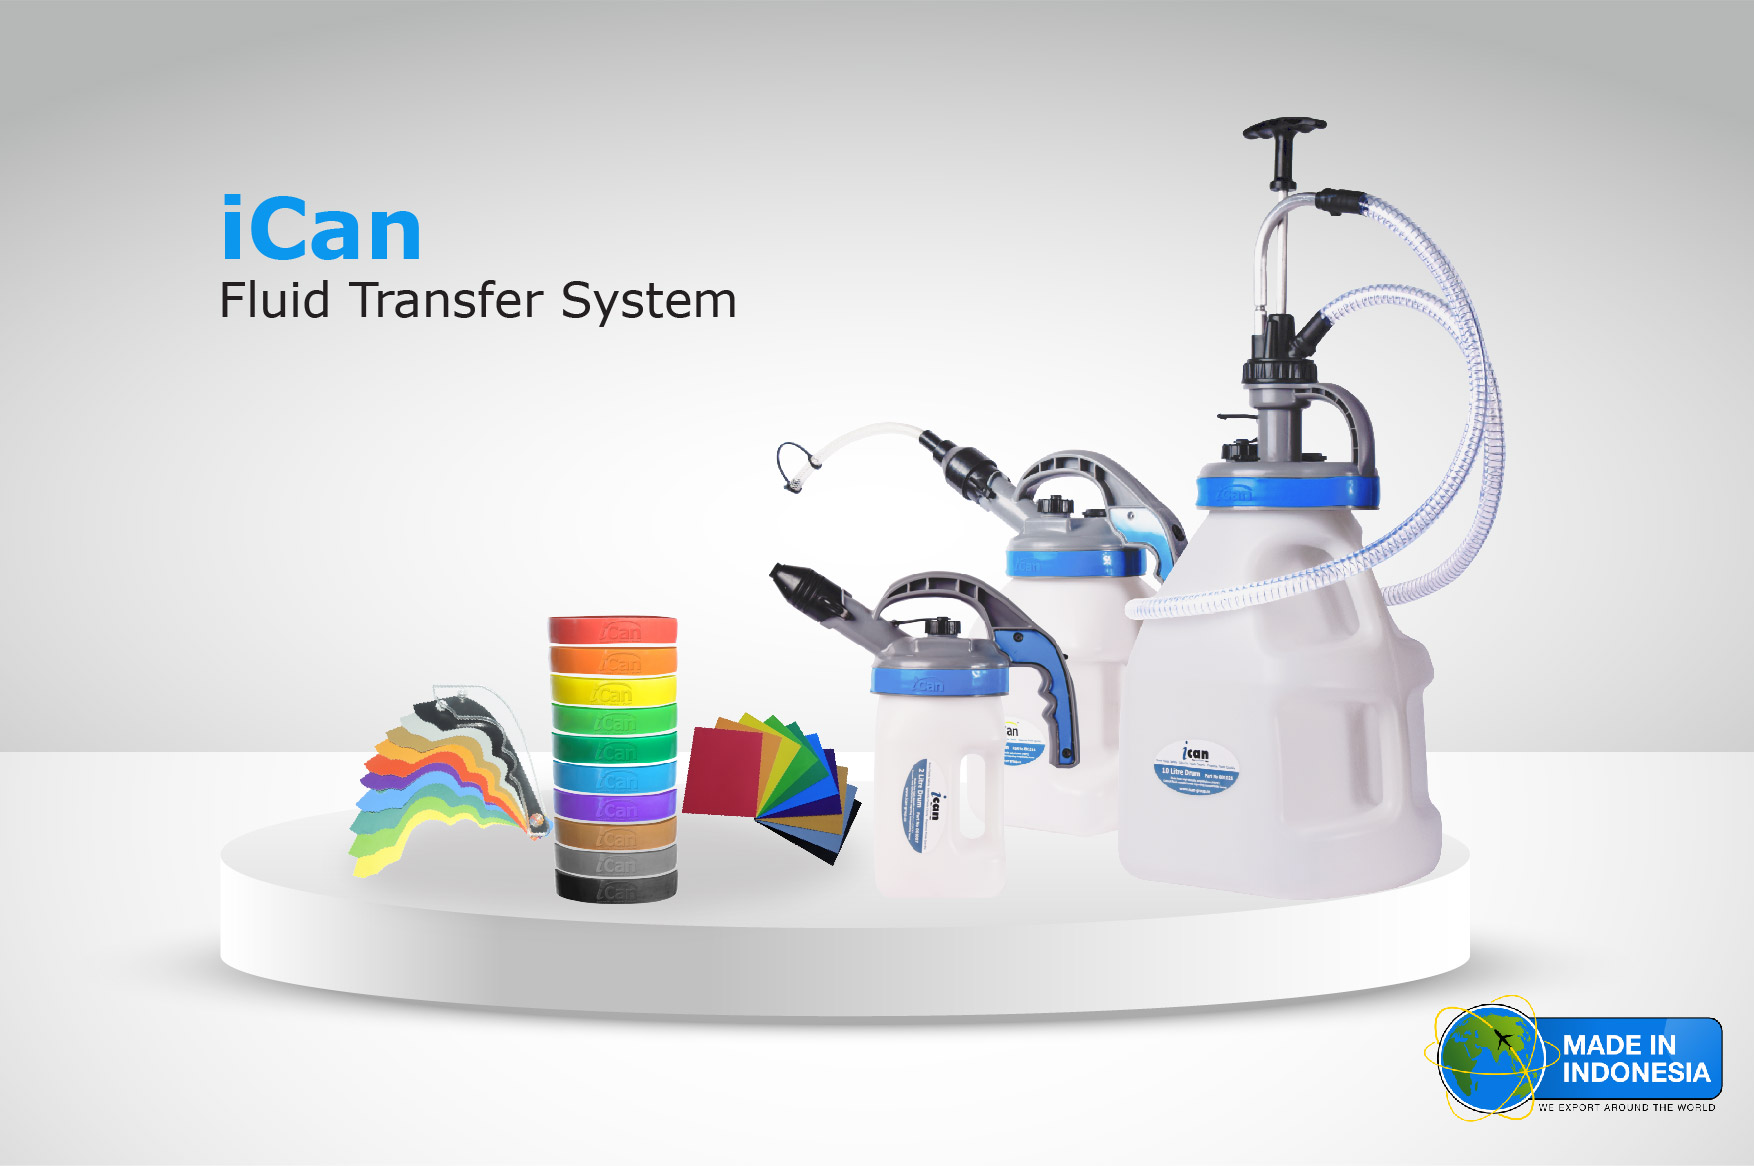 iCan Fluid Transfer System